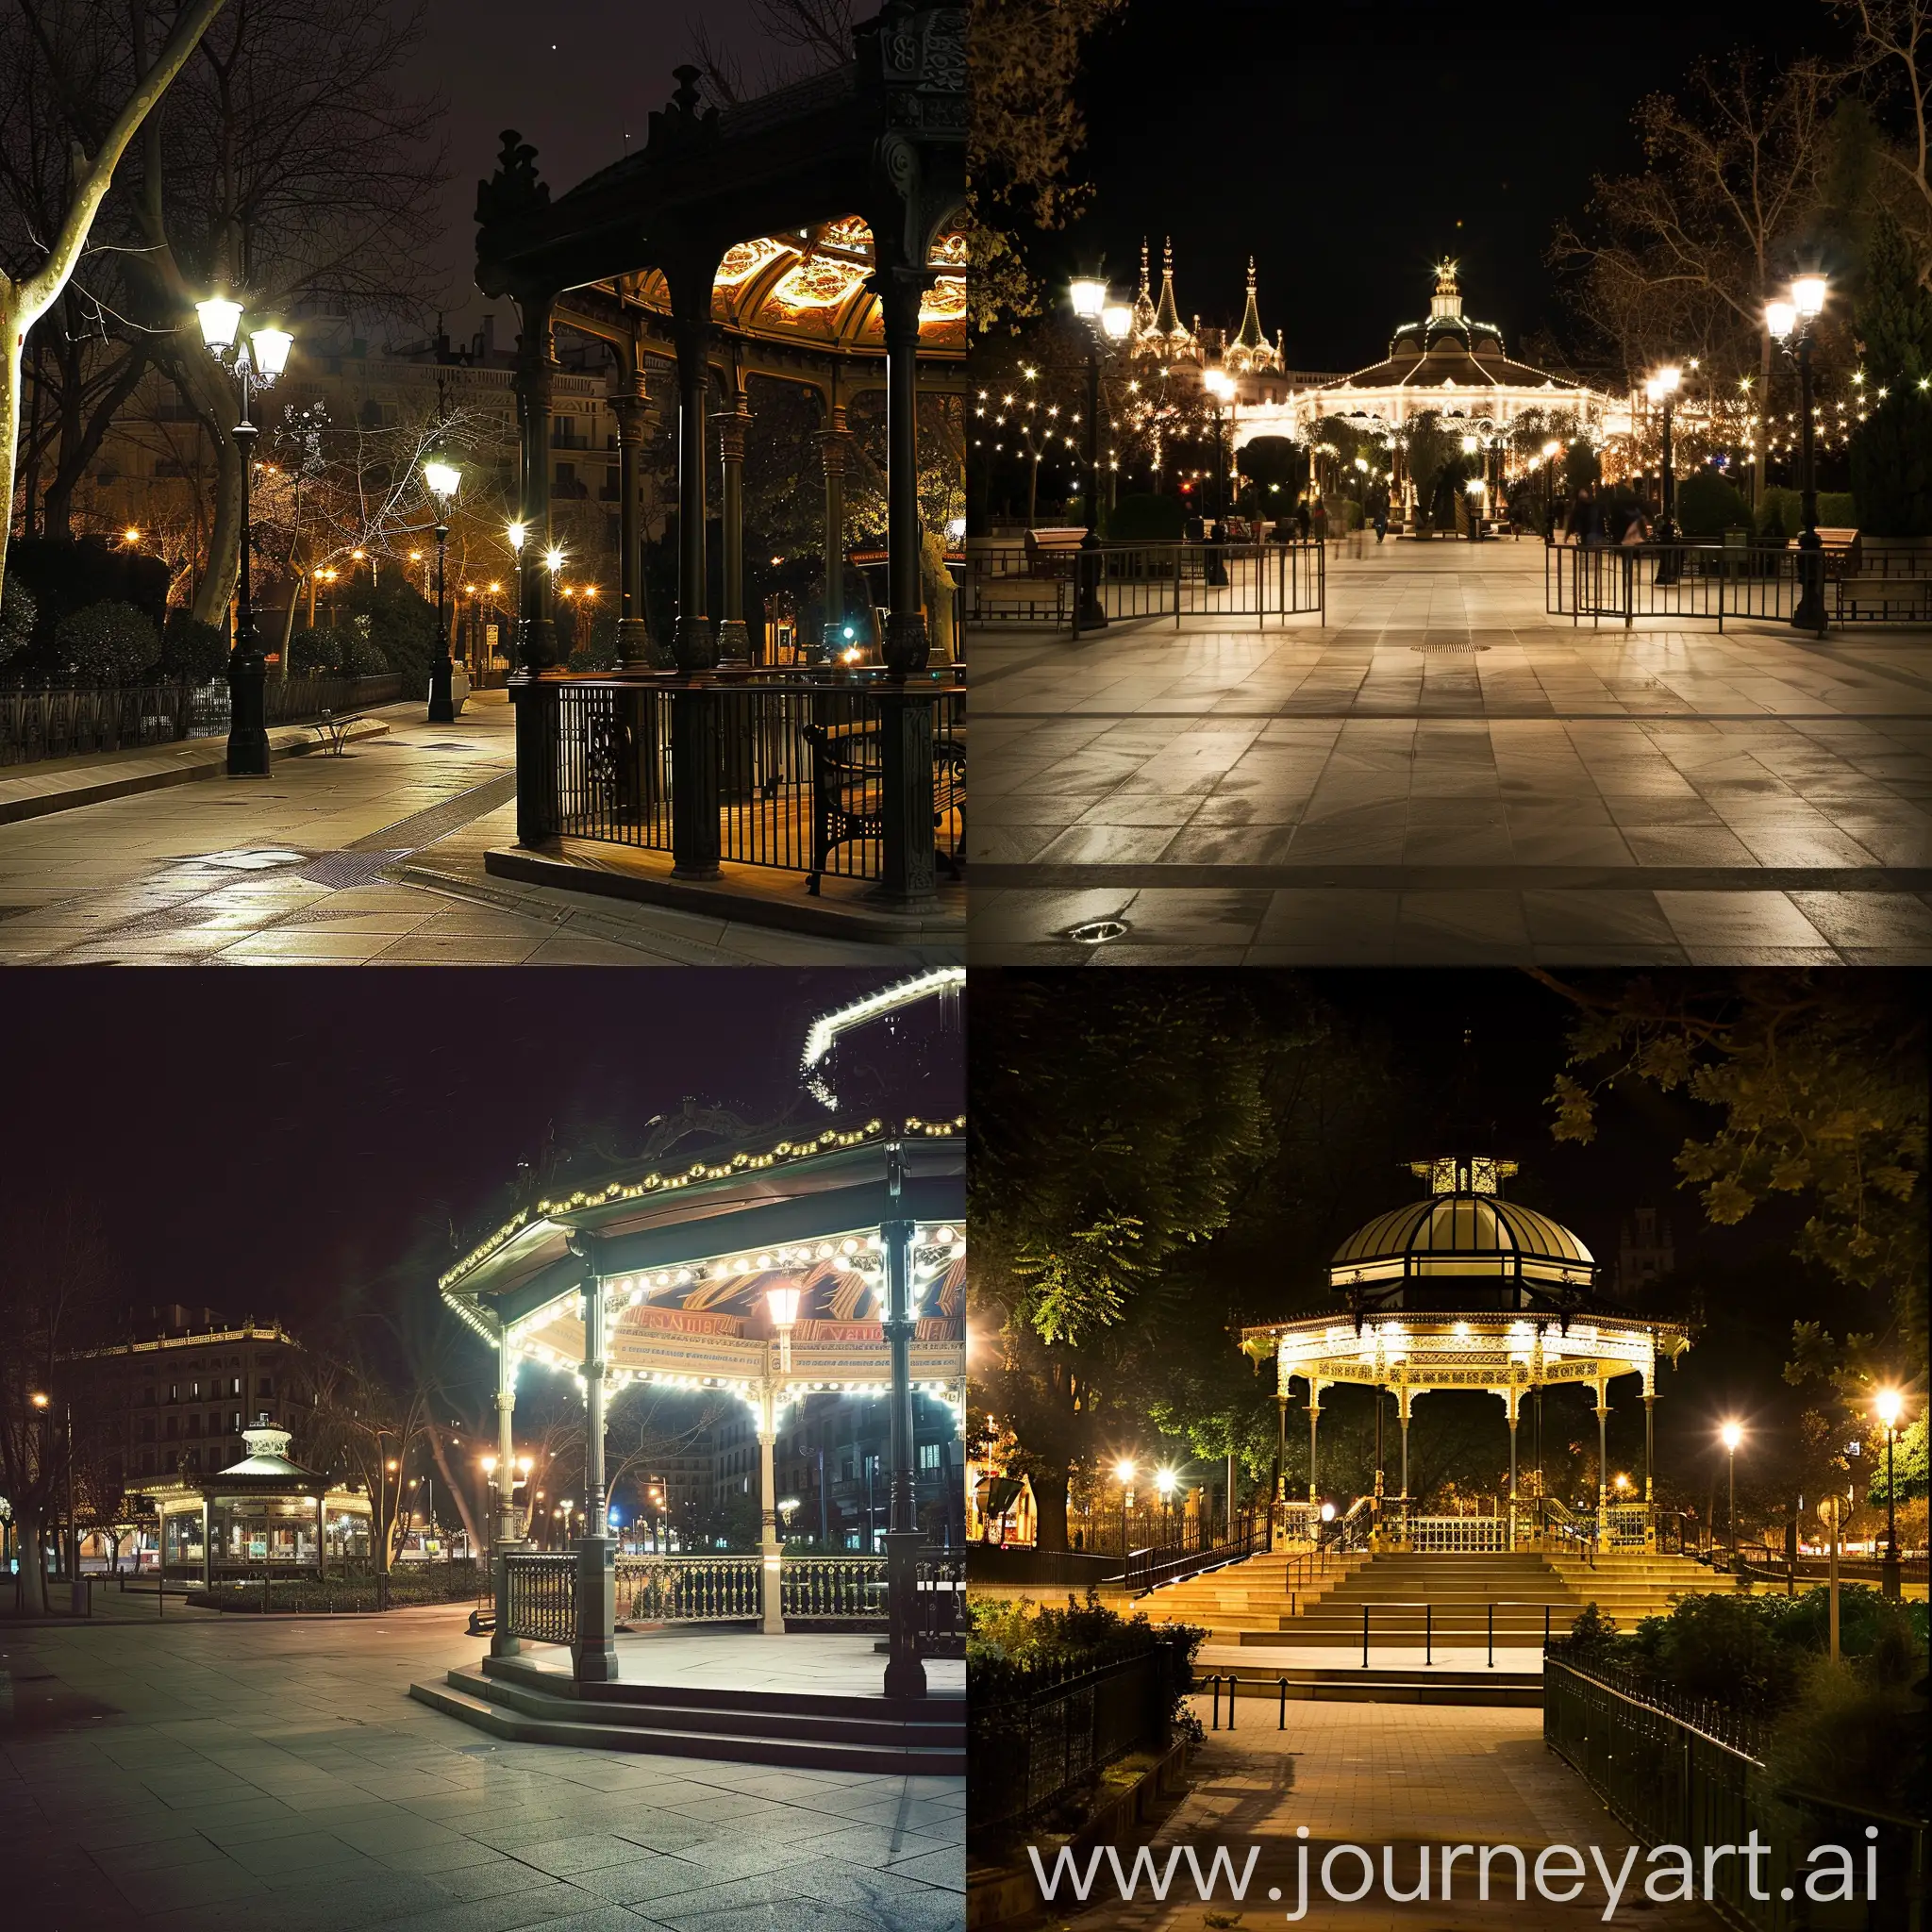 Vibrant-Night-Scene-of-Madrids-Iconic-Tourist-Spot